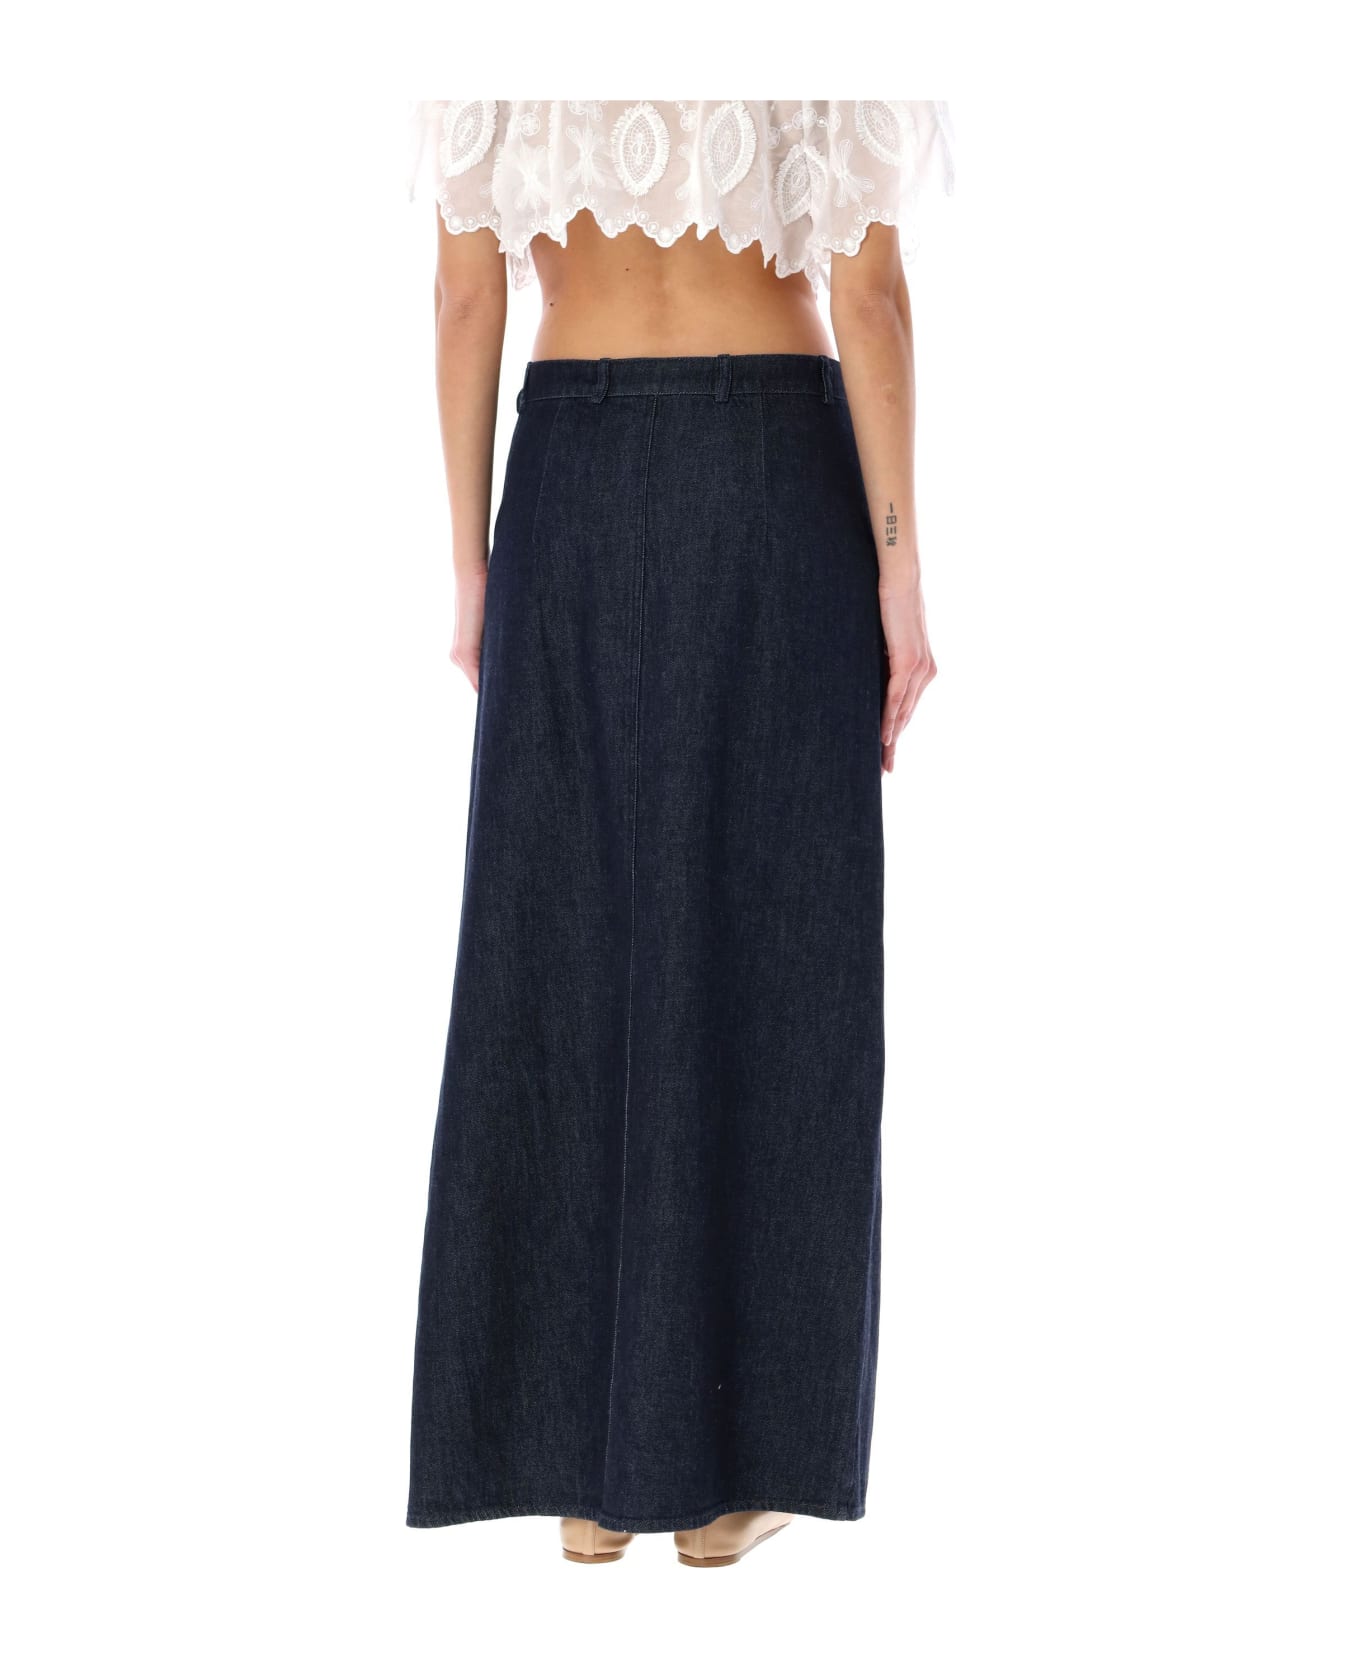 The Garment Eclipse Strap Long Skirt - DARK DENIM